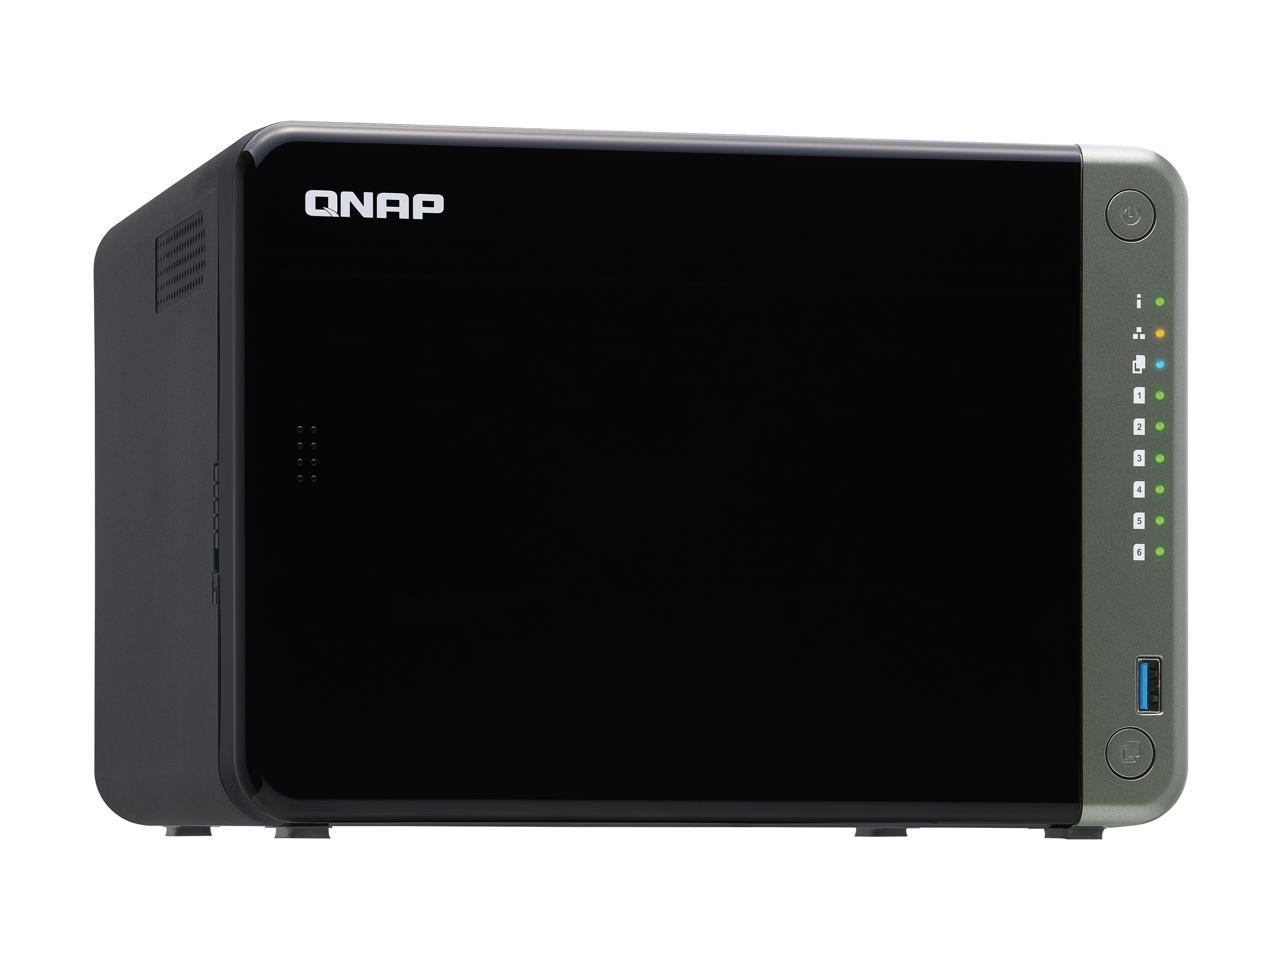 QNAP TS-653D-4G-US Diskless System Network Storage @Newegg $550